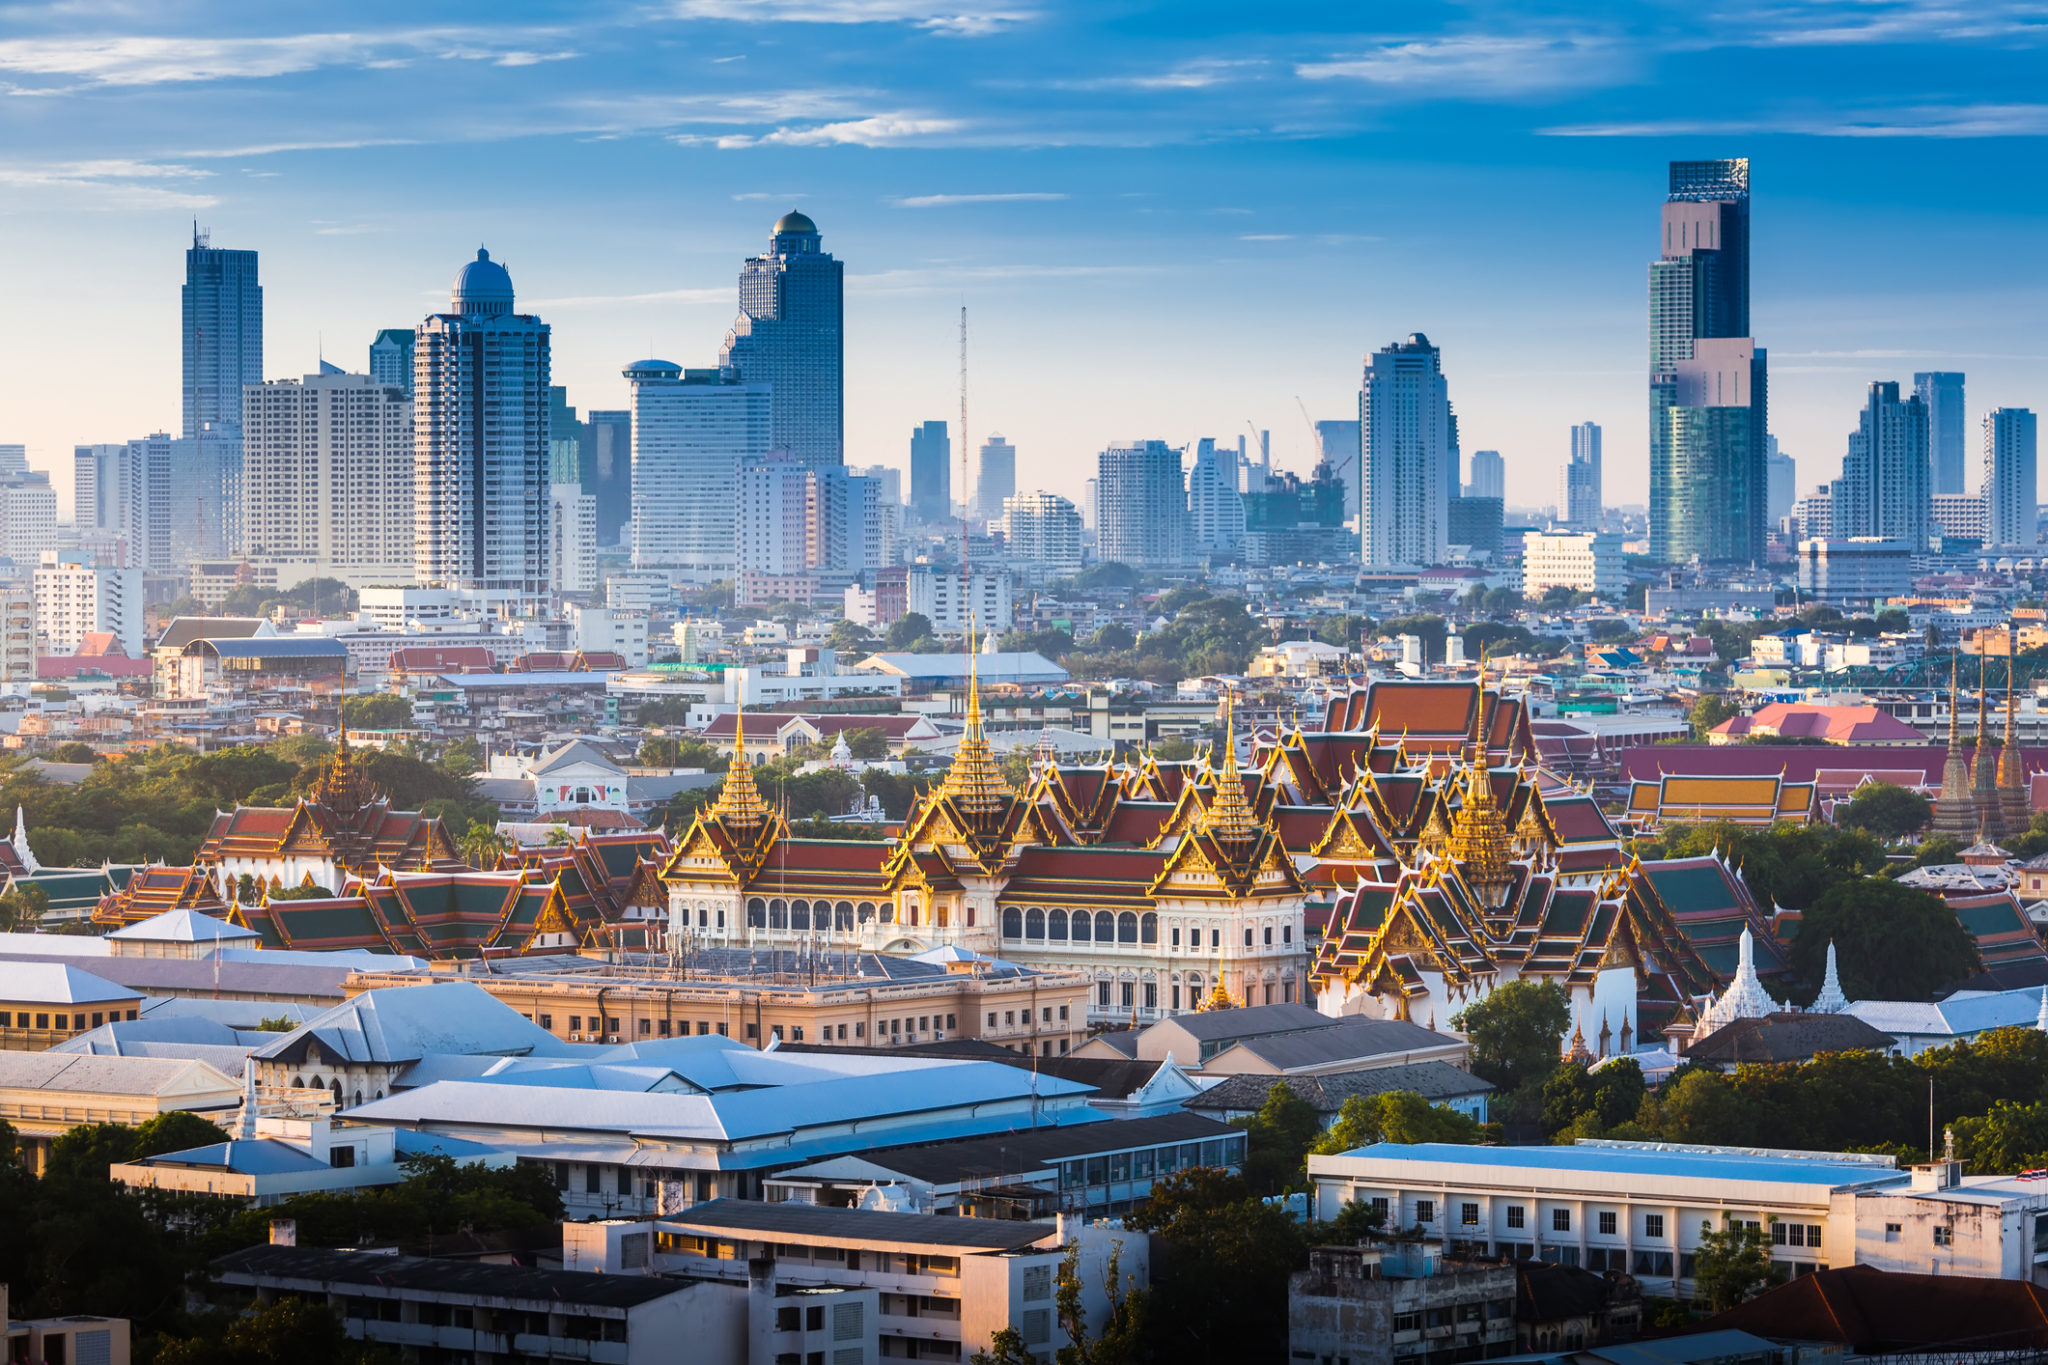 Thailand Economy To Shrink By 5.3%